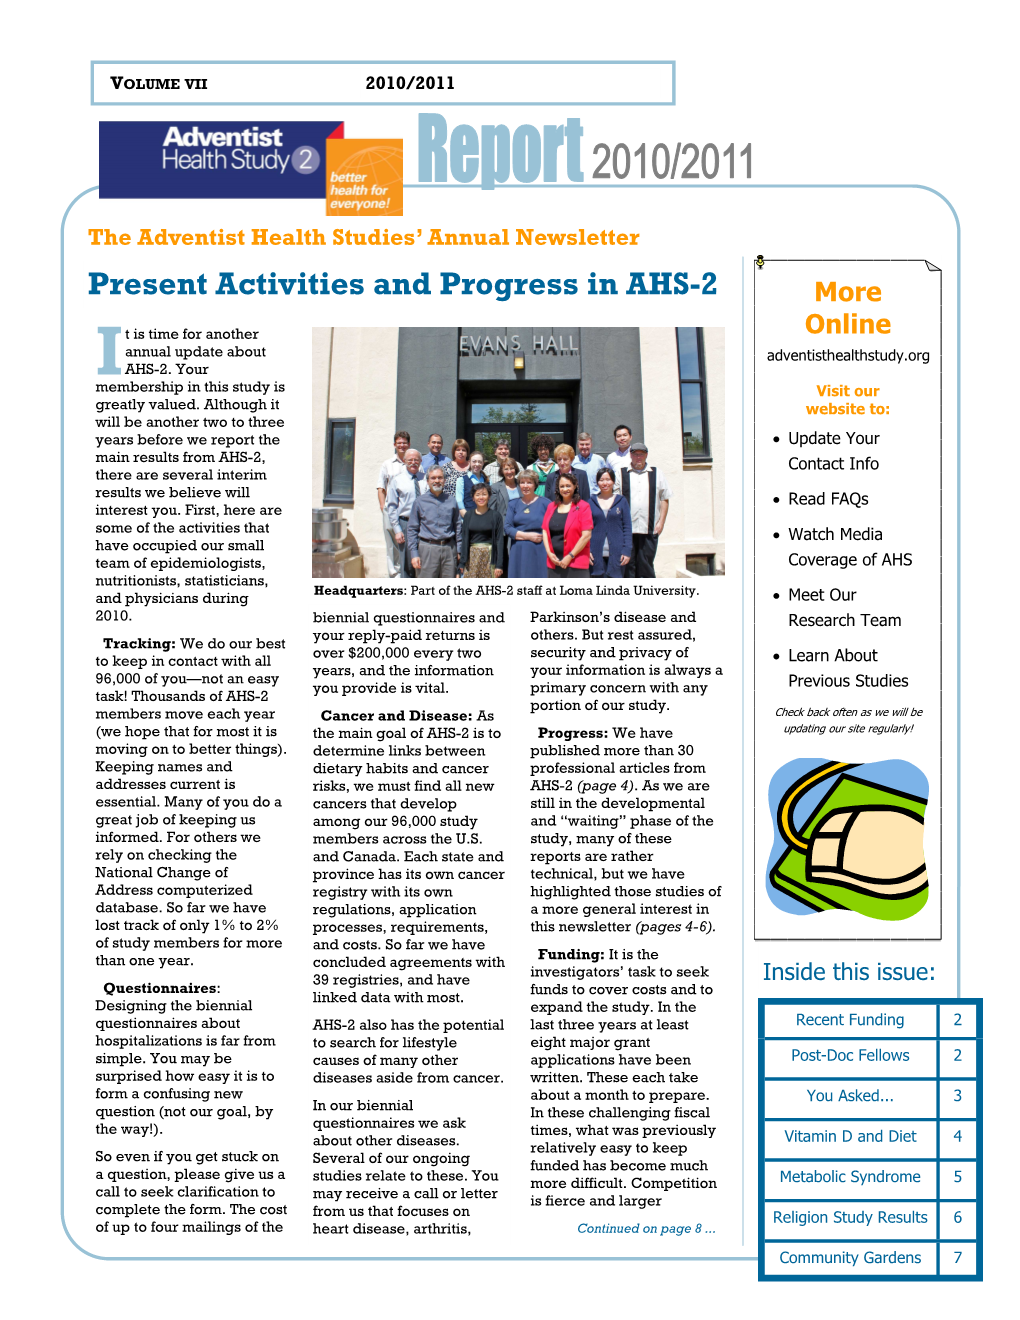 Annual Newsletter 2010 / 2011